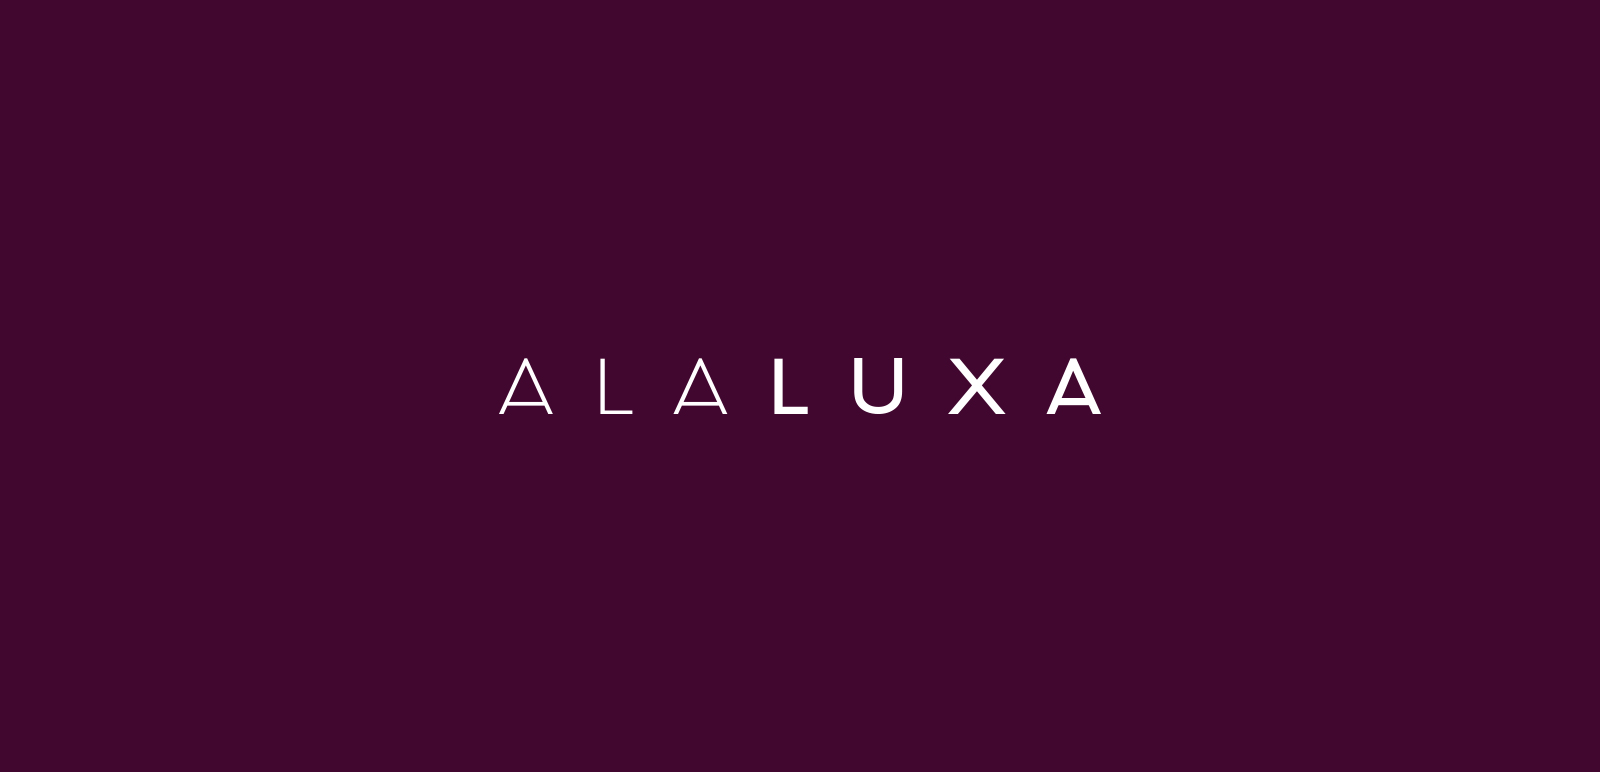 Alaluxa Logo, Corporate Identity 3